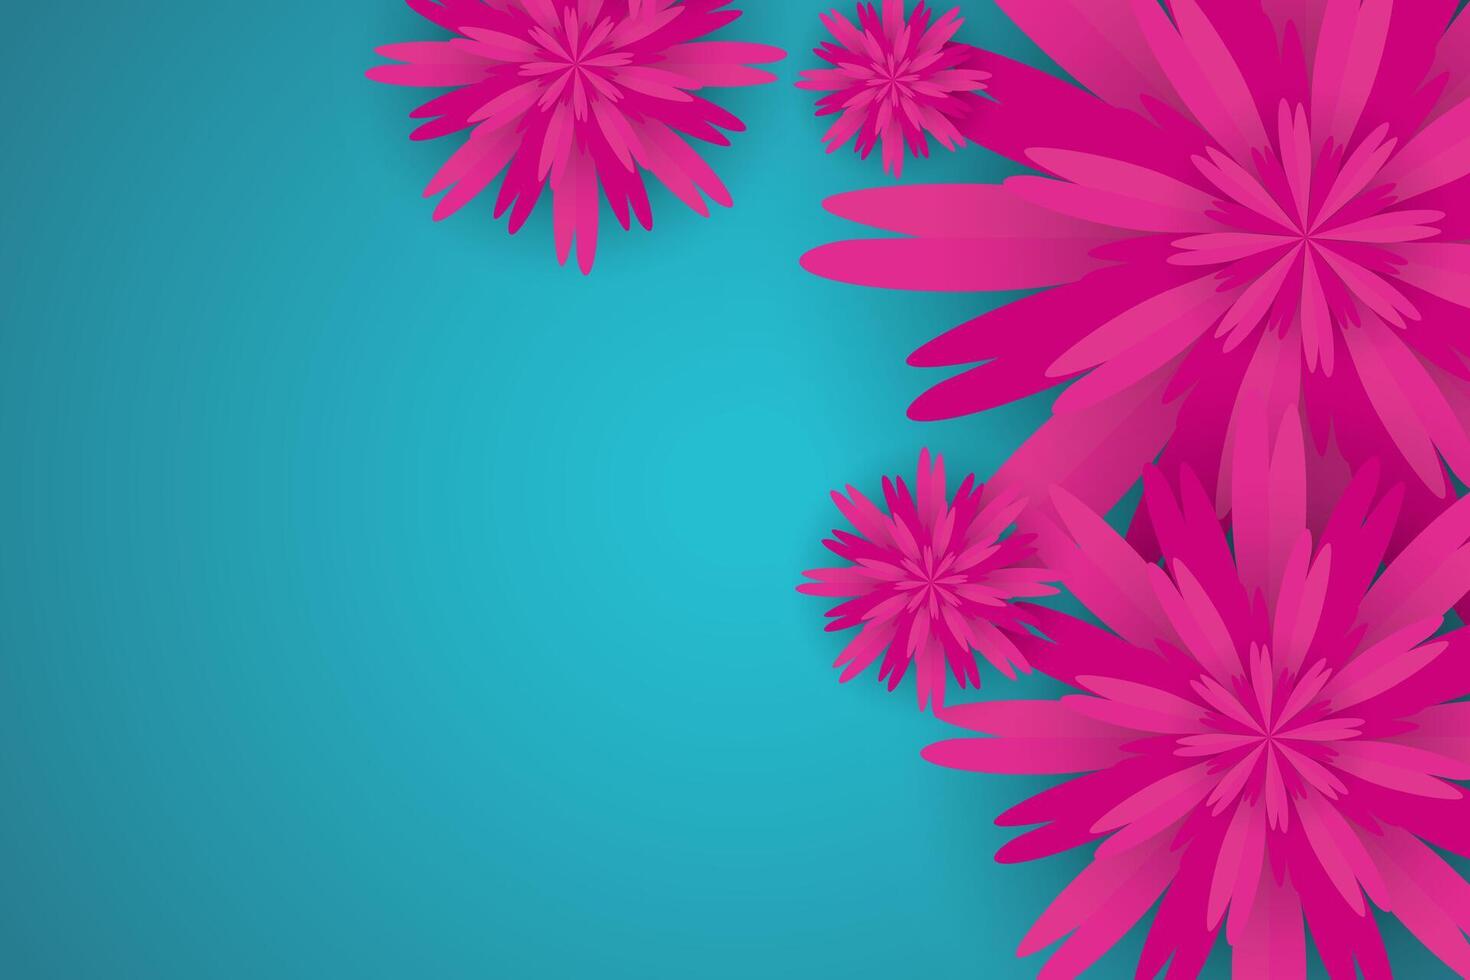 un rosado flor en ligero azul fondo, fondo de pantalla, póster, enviar tarjeta vector diseño conceptos para De las mujeres día concepto vector plantillas